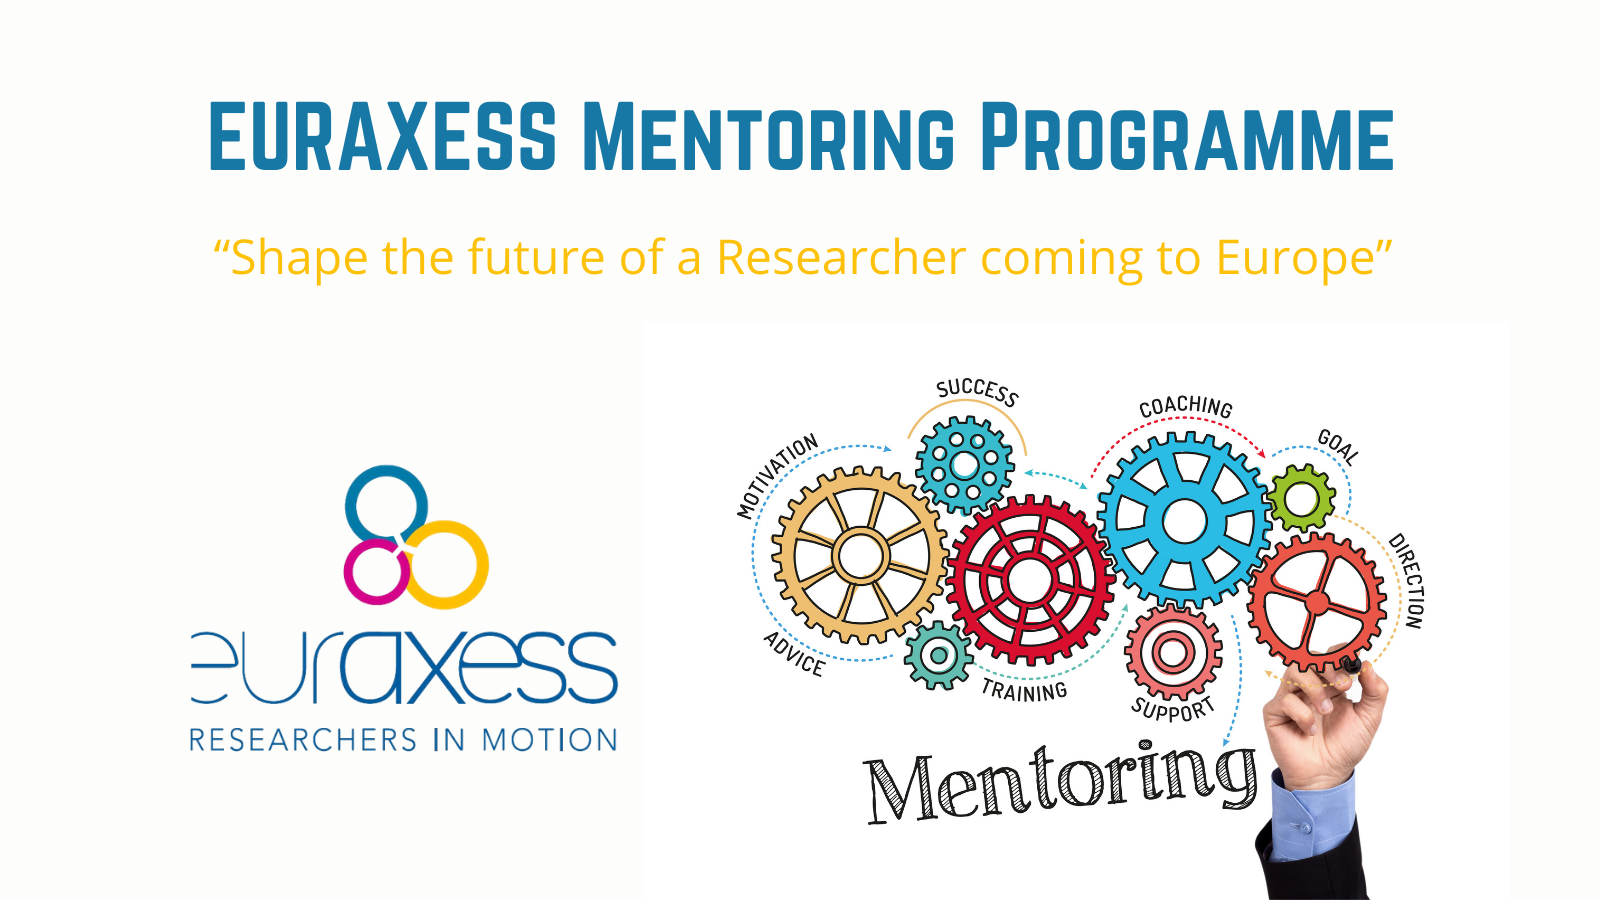 Euraxess Georgia disseminates information about an international mentoring program